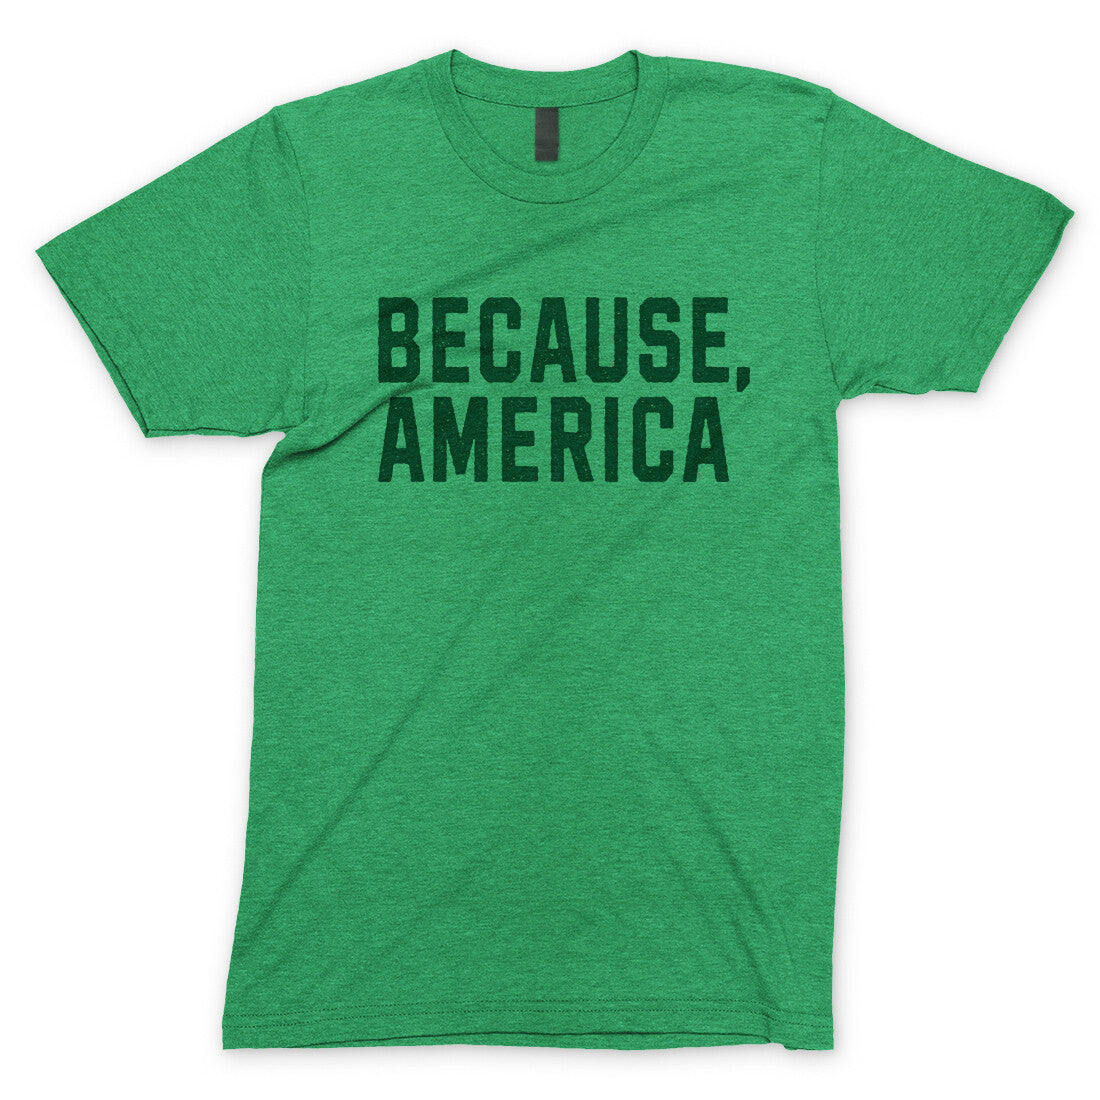 Because America in Heather Irish Green Color